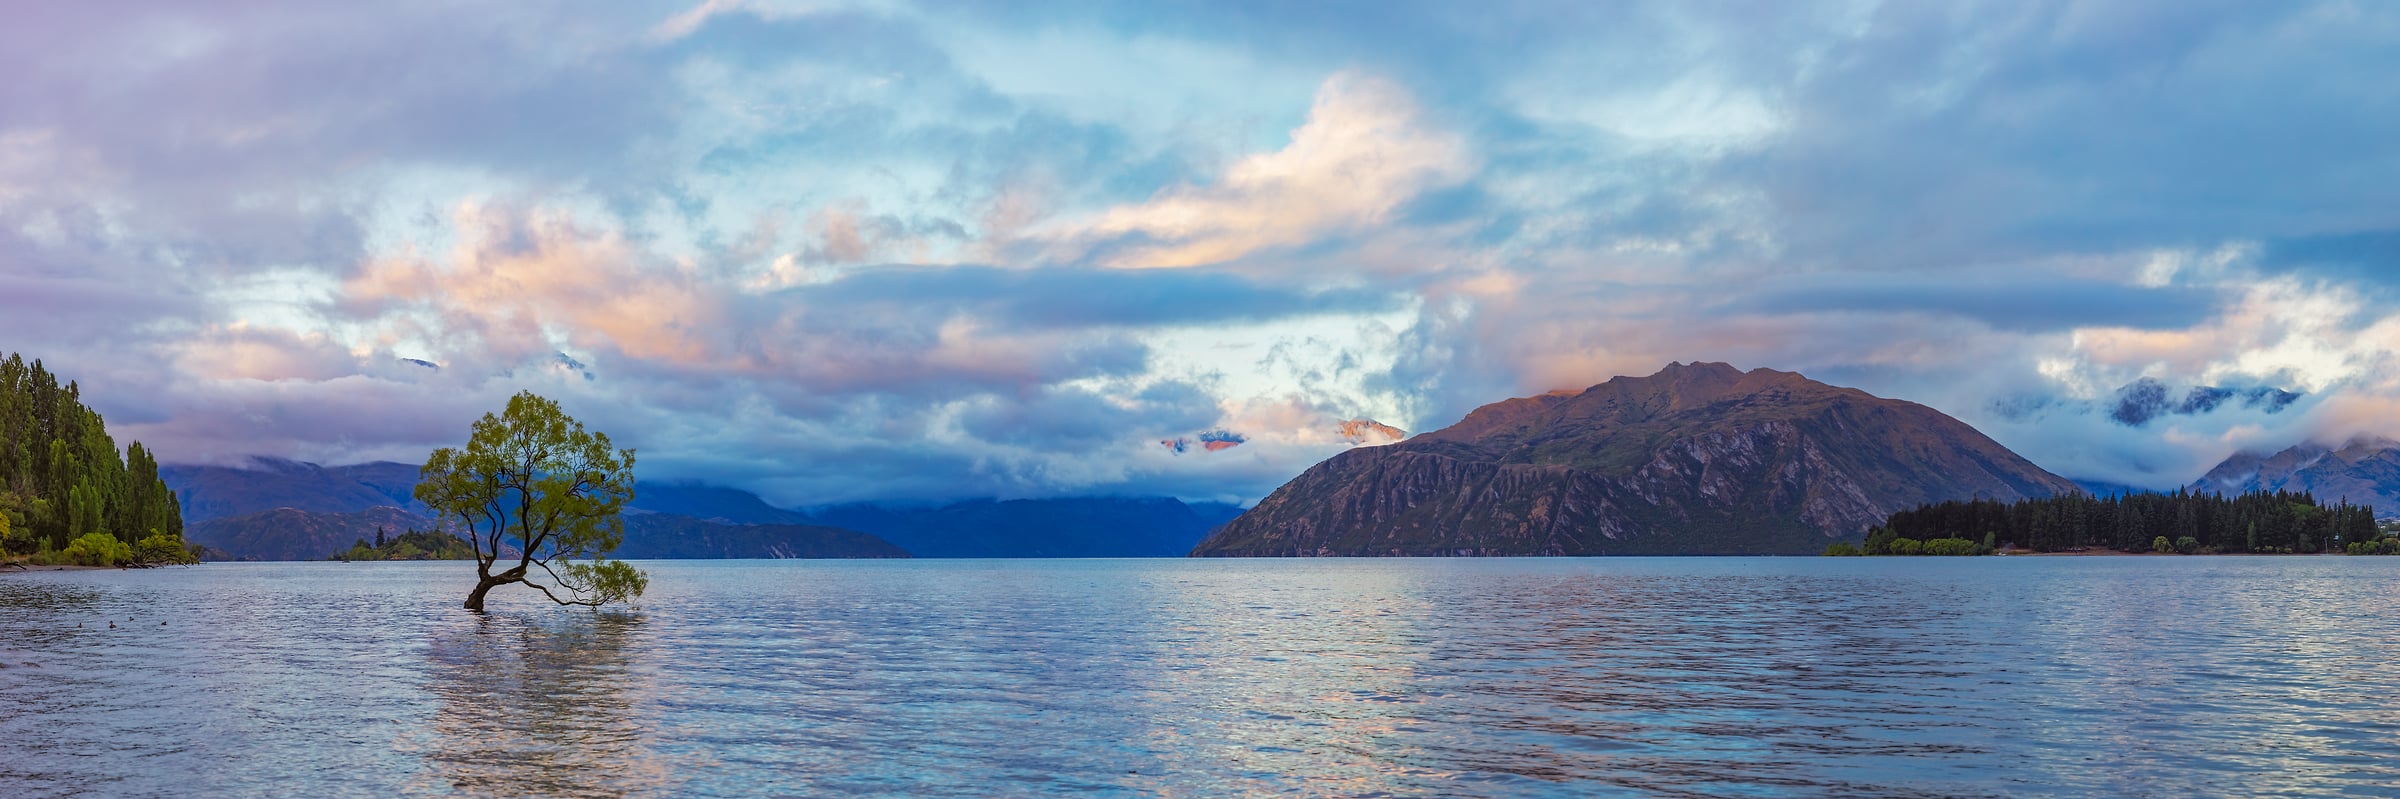 736 megapixels! A very high resolution, large-format VAST photo print of a beautiful lake with a tree; panorama photograph created by John Freeman in Wanaka Lake, Wanaka, New Zealand.